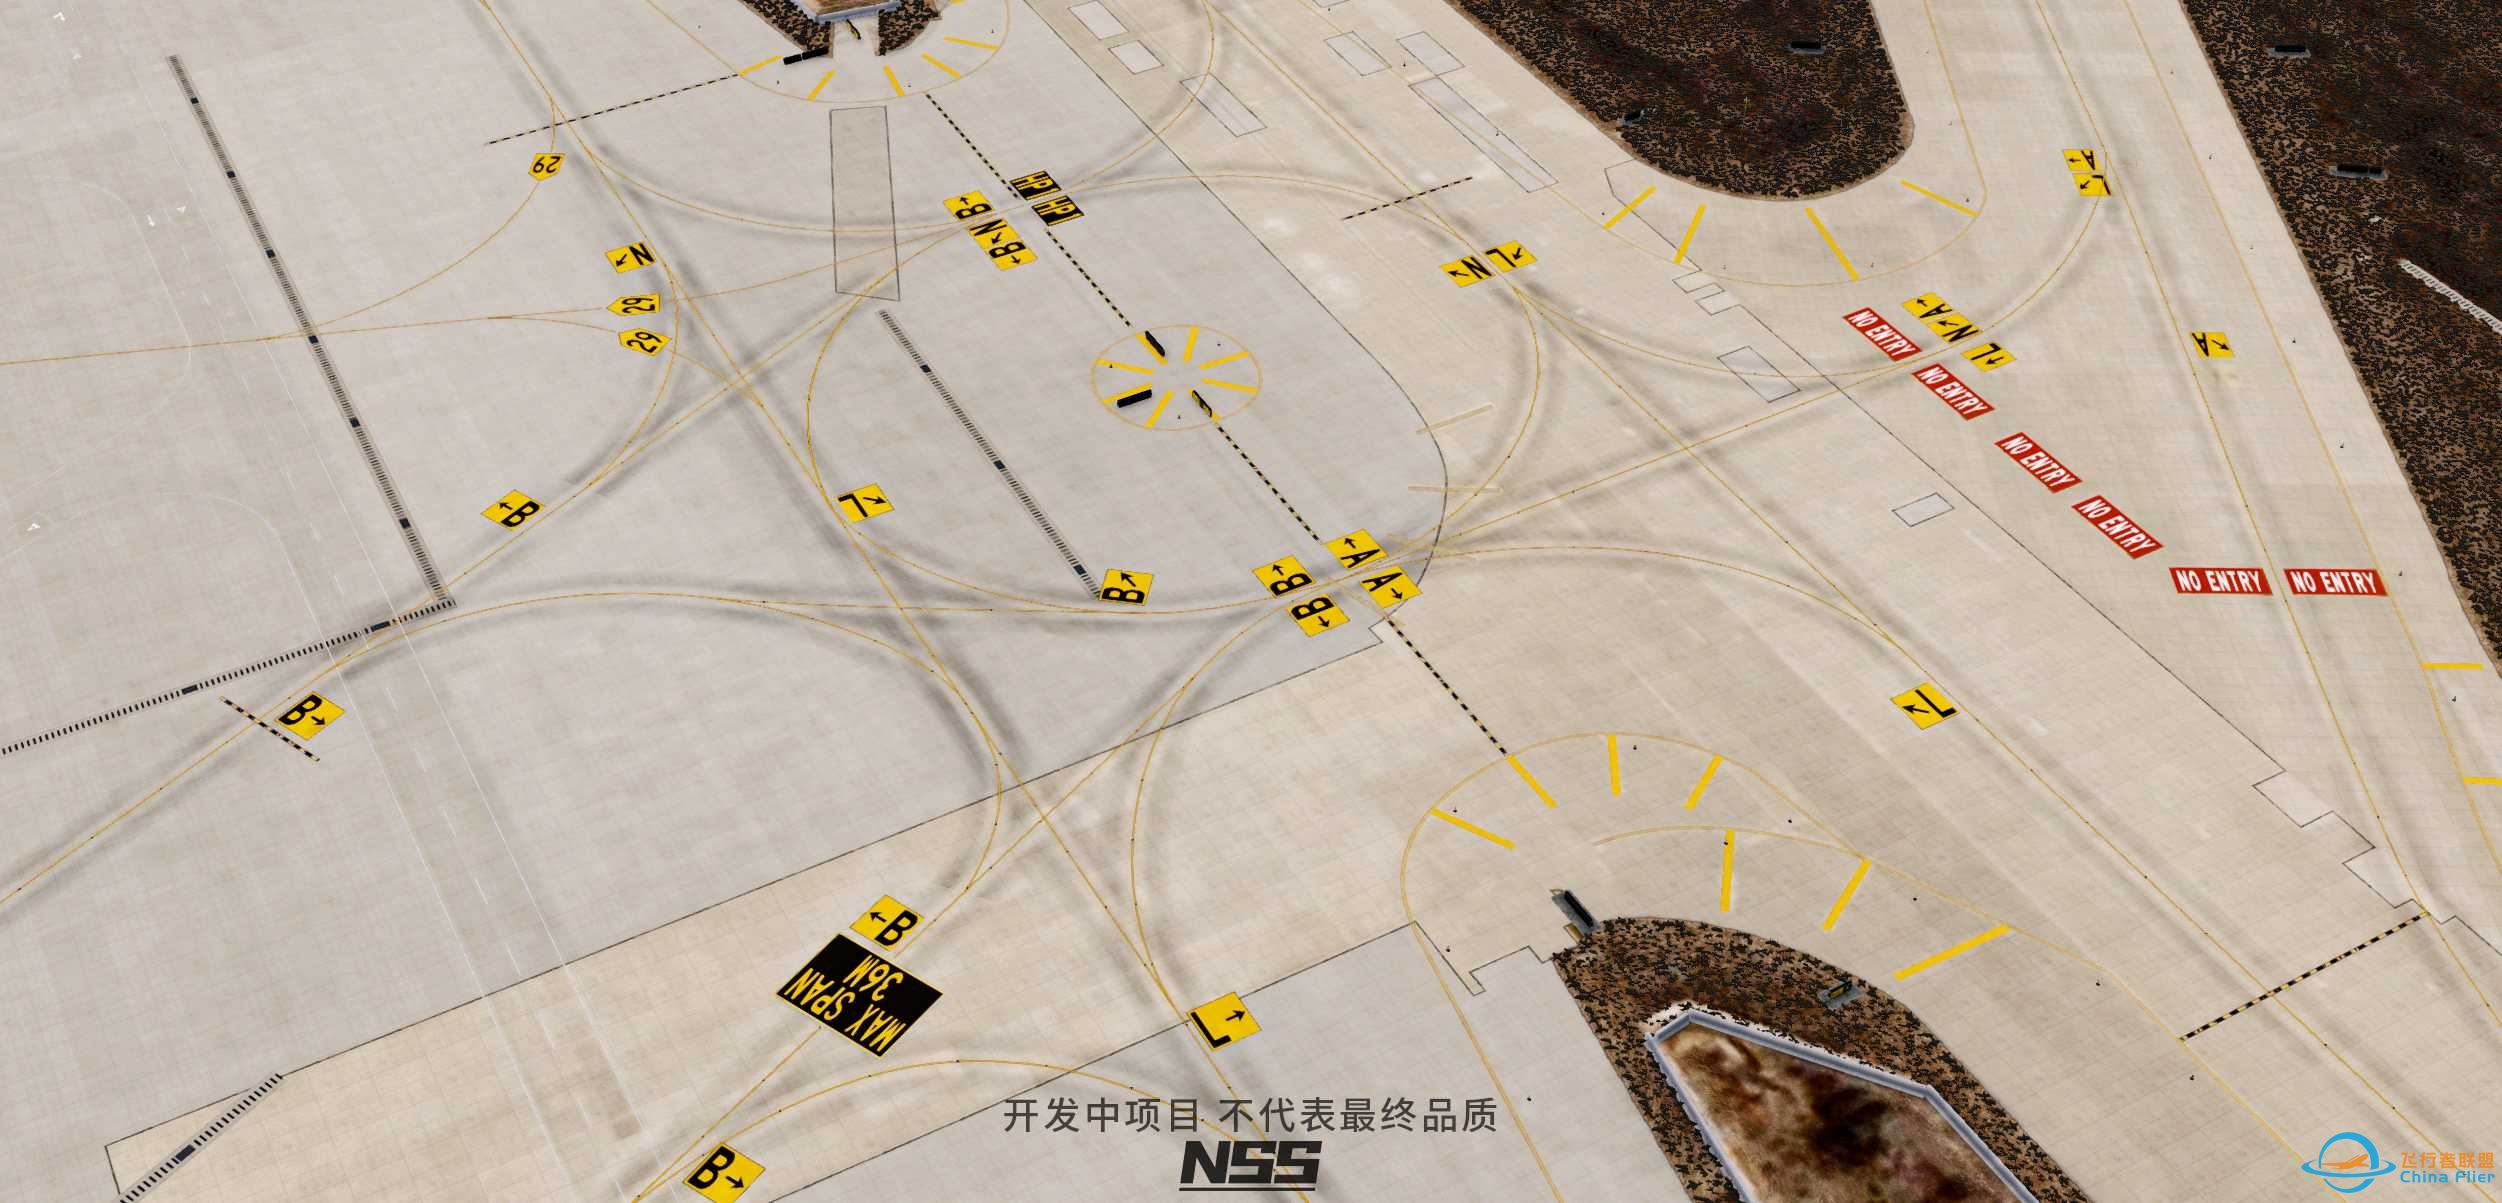 NSS地景开发组 ZSJN 济南遥墙国际机场项目预览 兼公布-345 